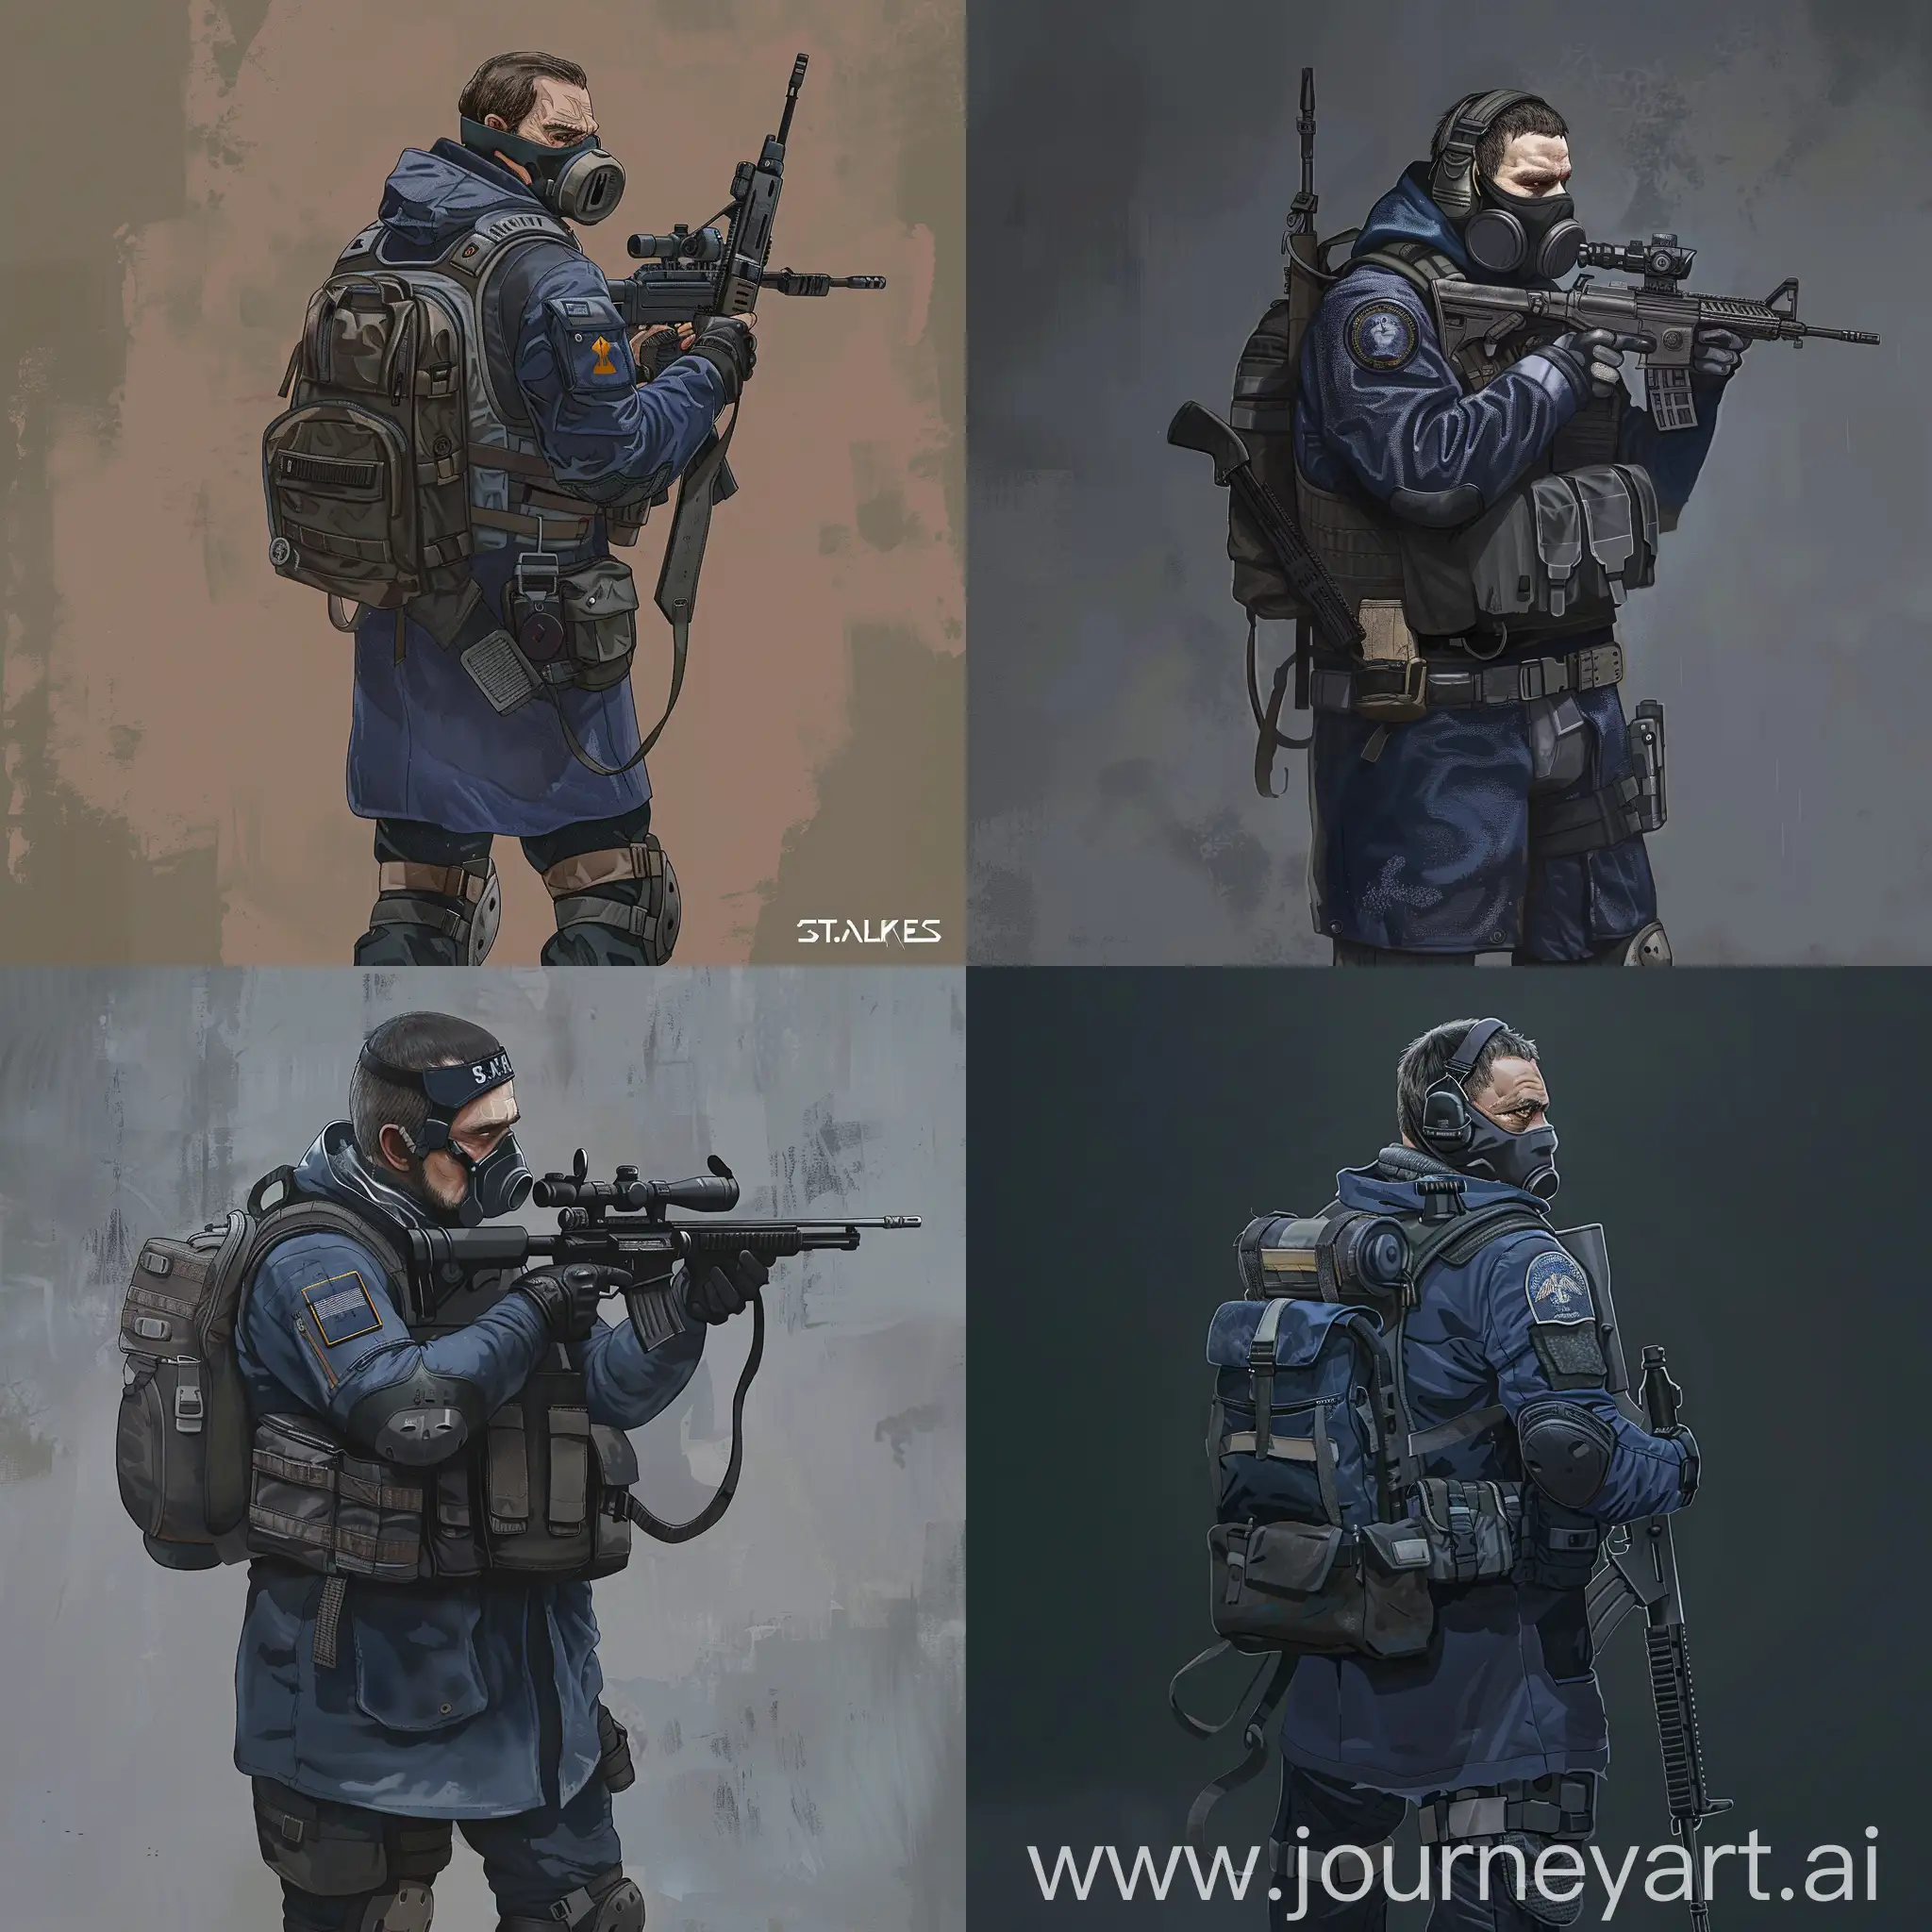 Mercenary-from-STALKER-Universe-in-Dark-Blue-Raincoat-with-Sniper-Rifle